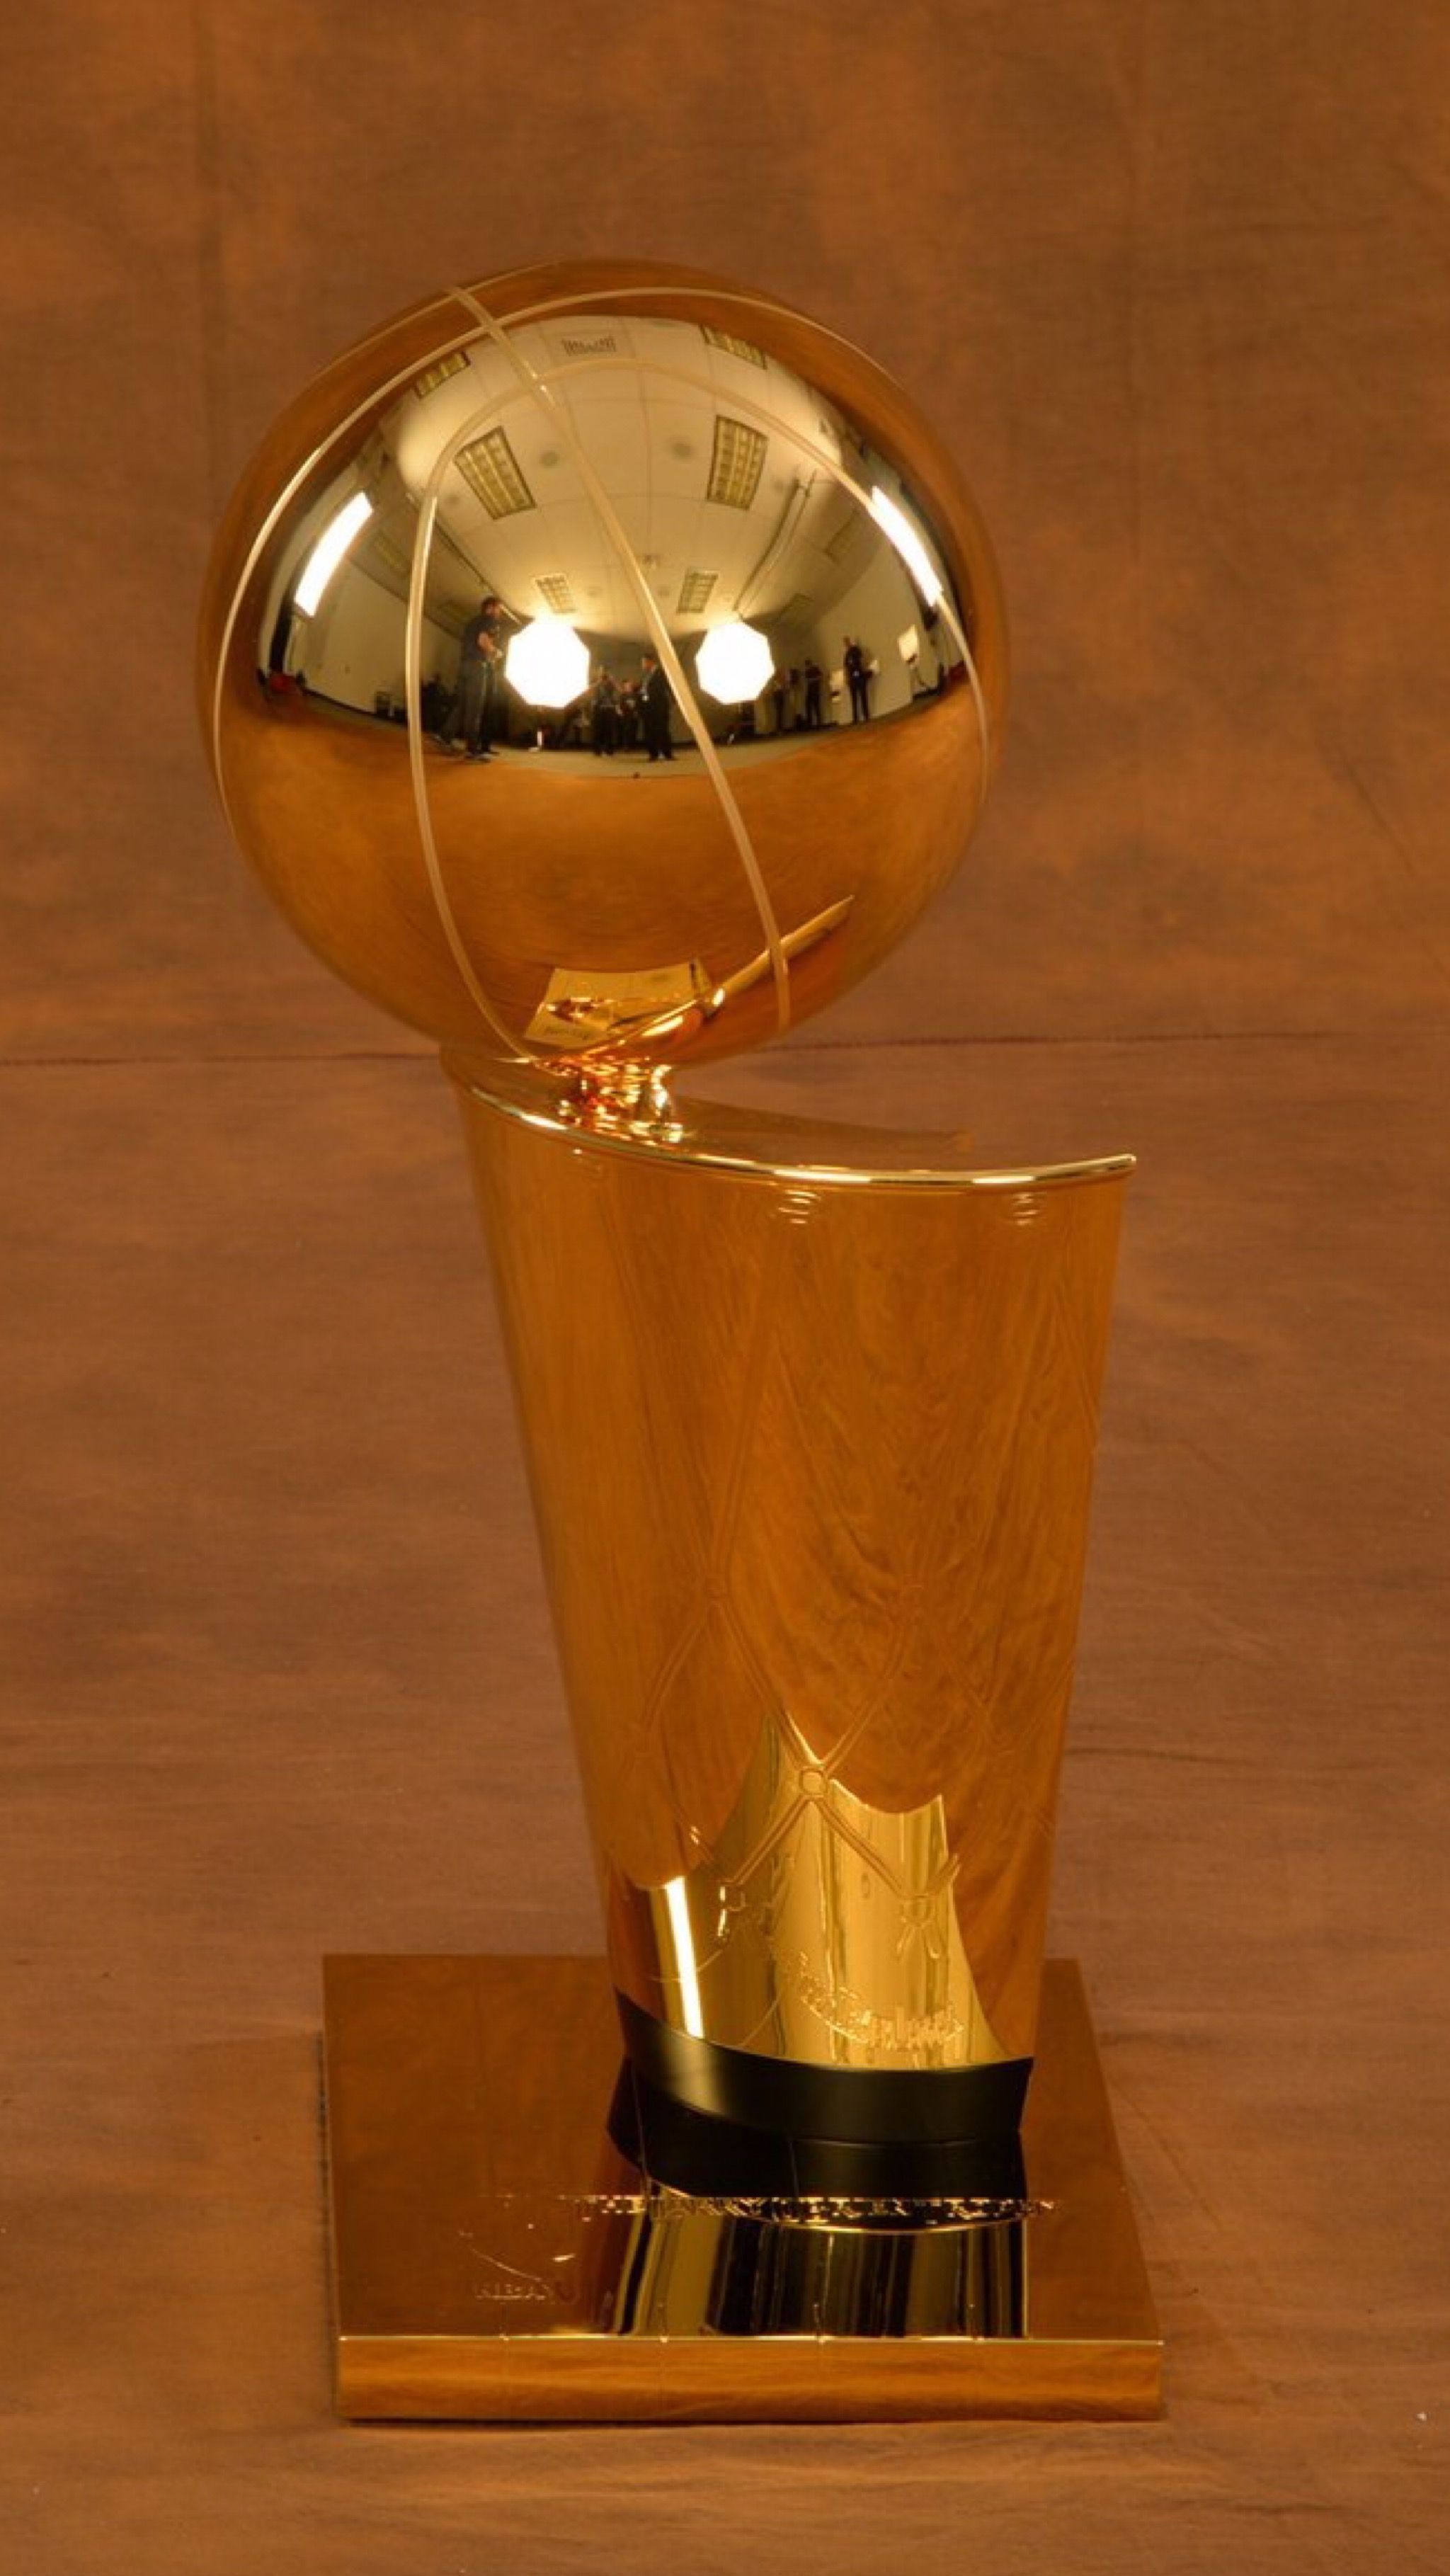 Larry O'Brien Championship Trophy. Trophy, Nba, Nba wallpaper